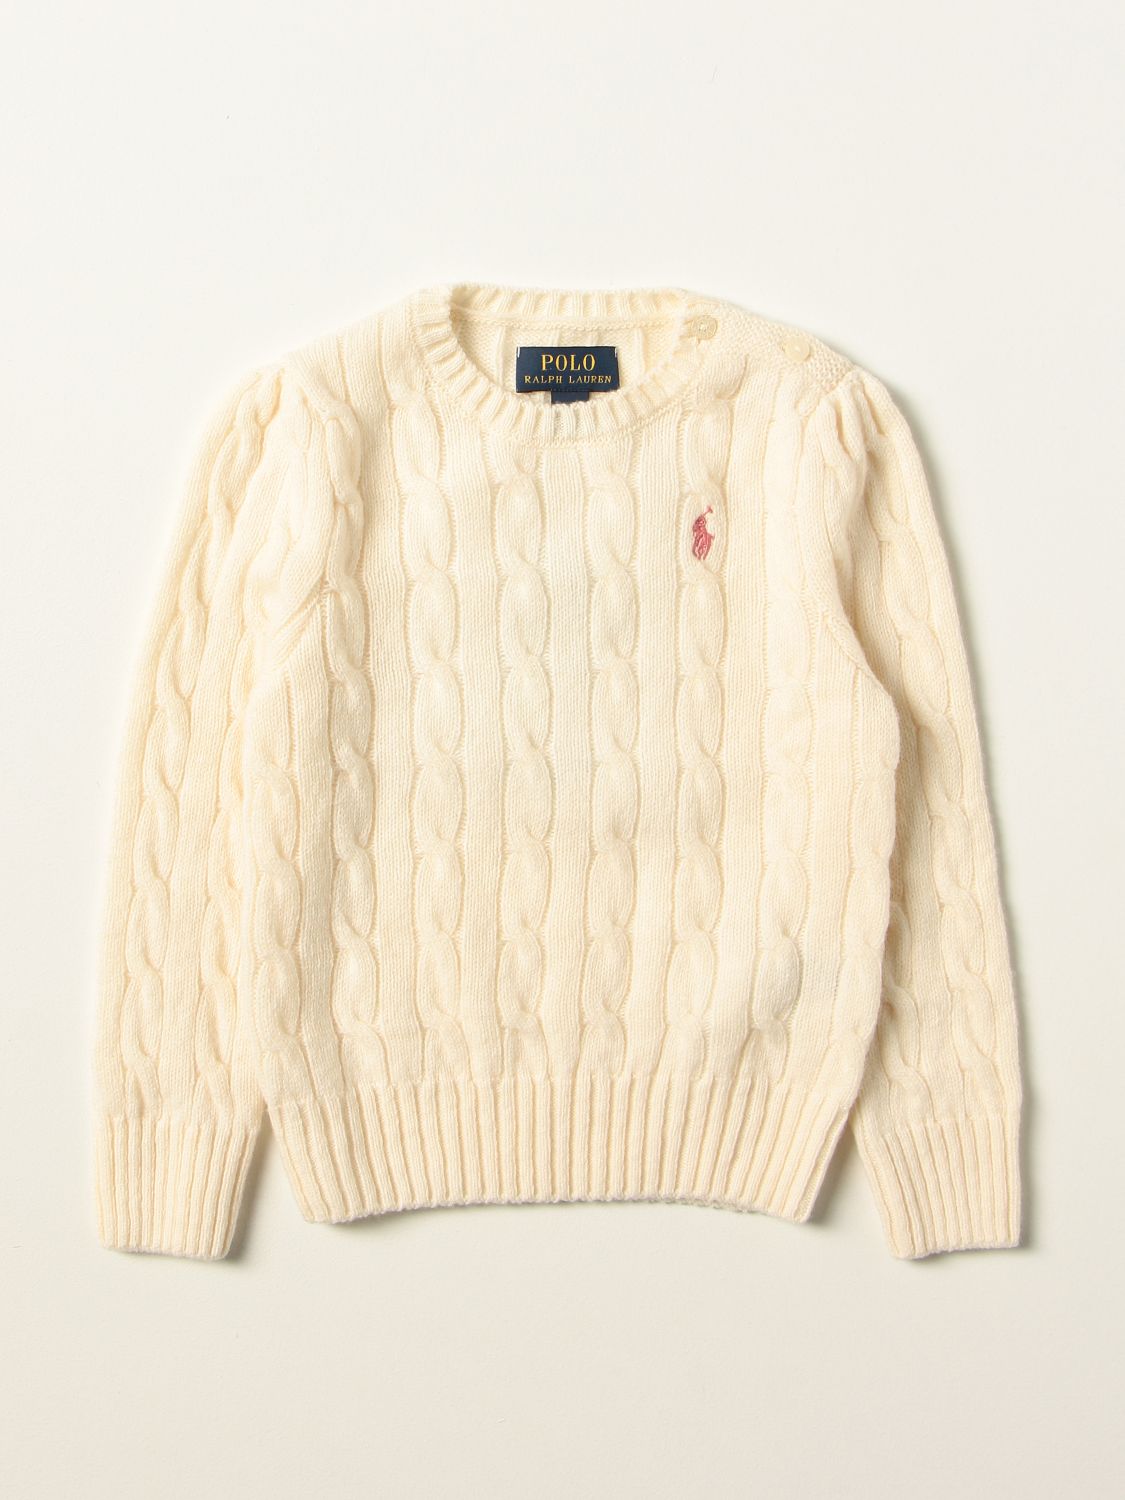 POLO RALPH LAUREN: sweater with logo - Cream | Polo Ralph Lauren sweater  311702223 online on 